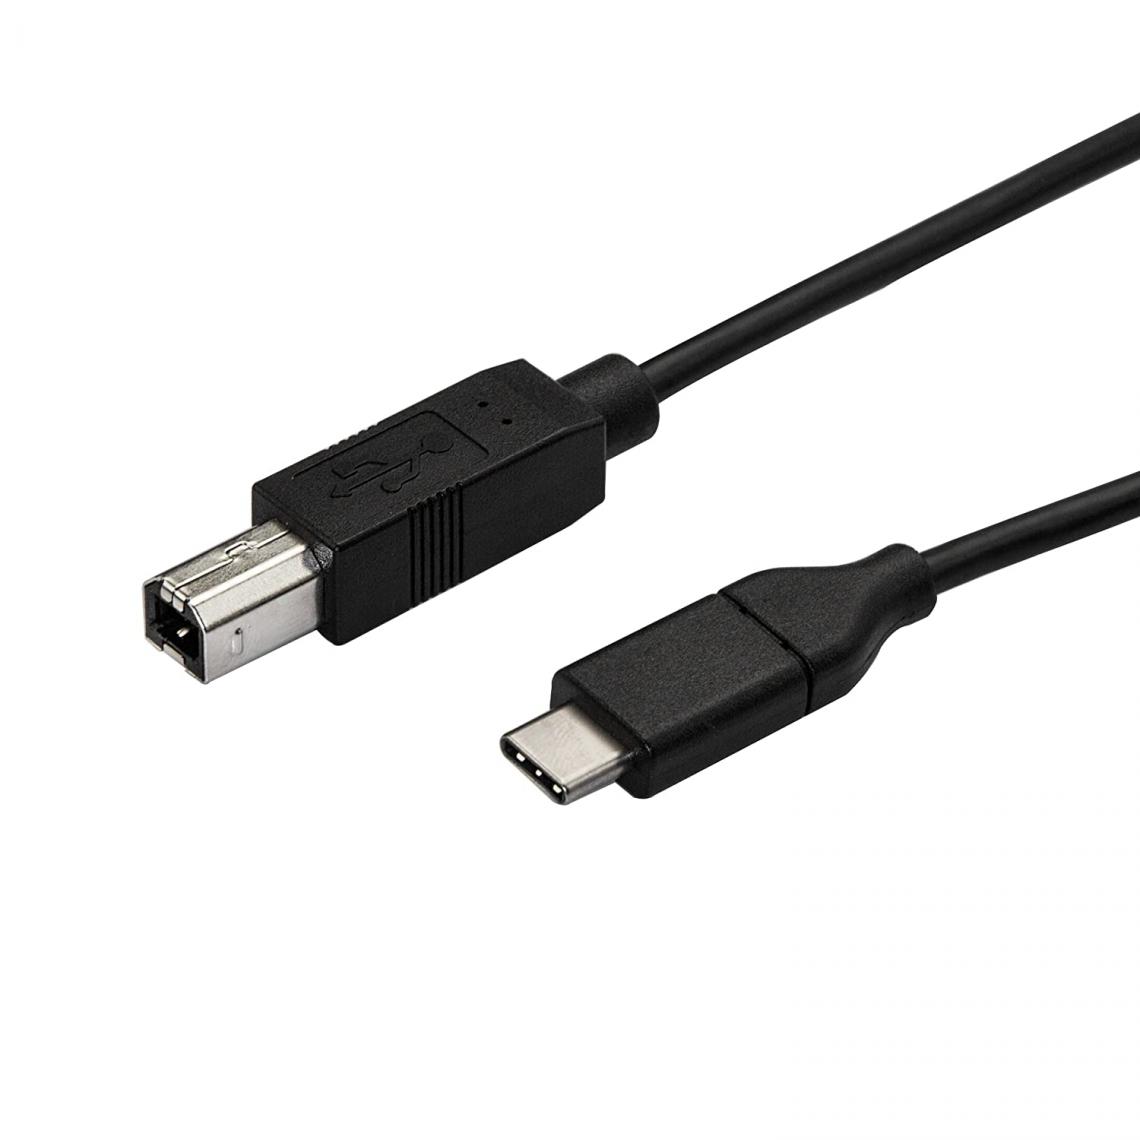 Ineck - INECK - Cable USB 2.0 Type C (USB-C) vers Type B (USB-B) Imprimante Scanner cable Noir 2m - Câble antenne